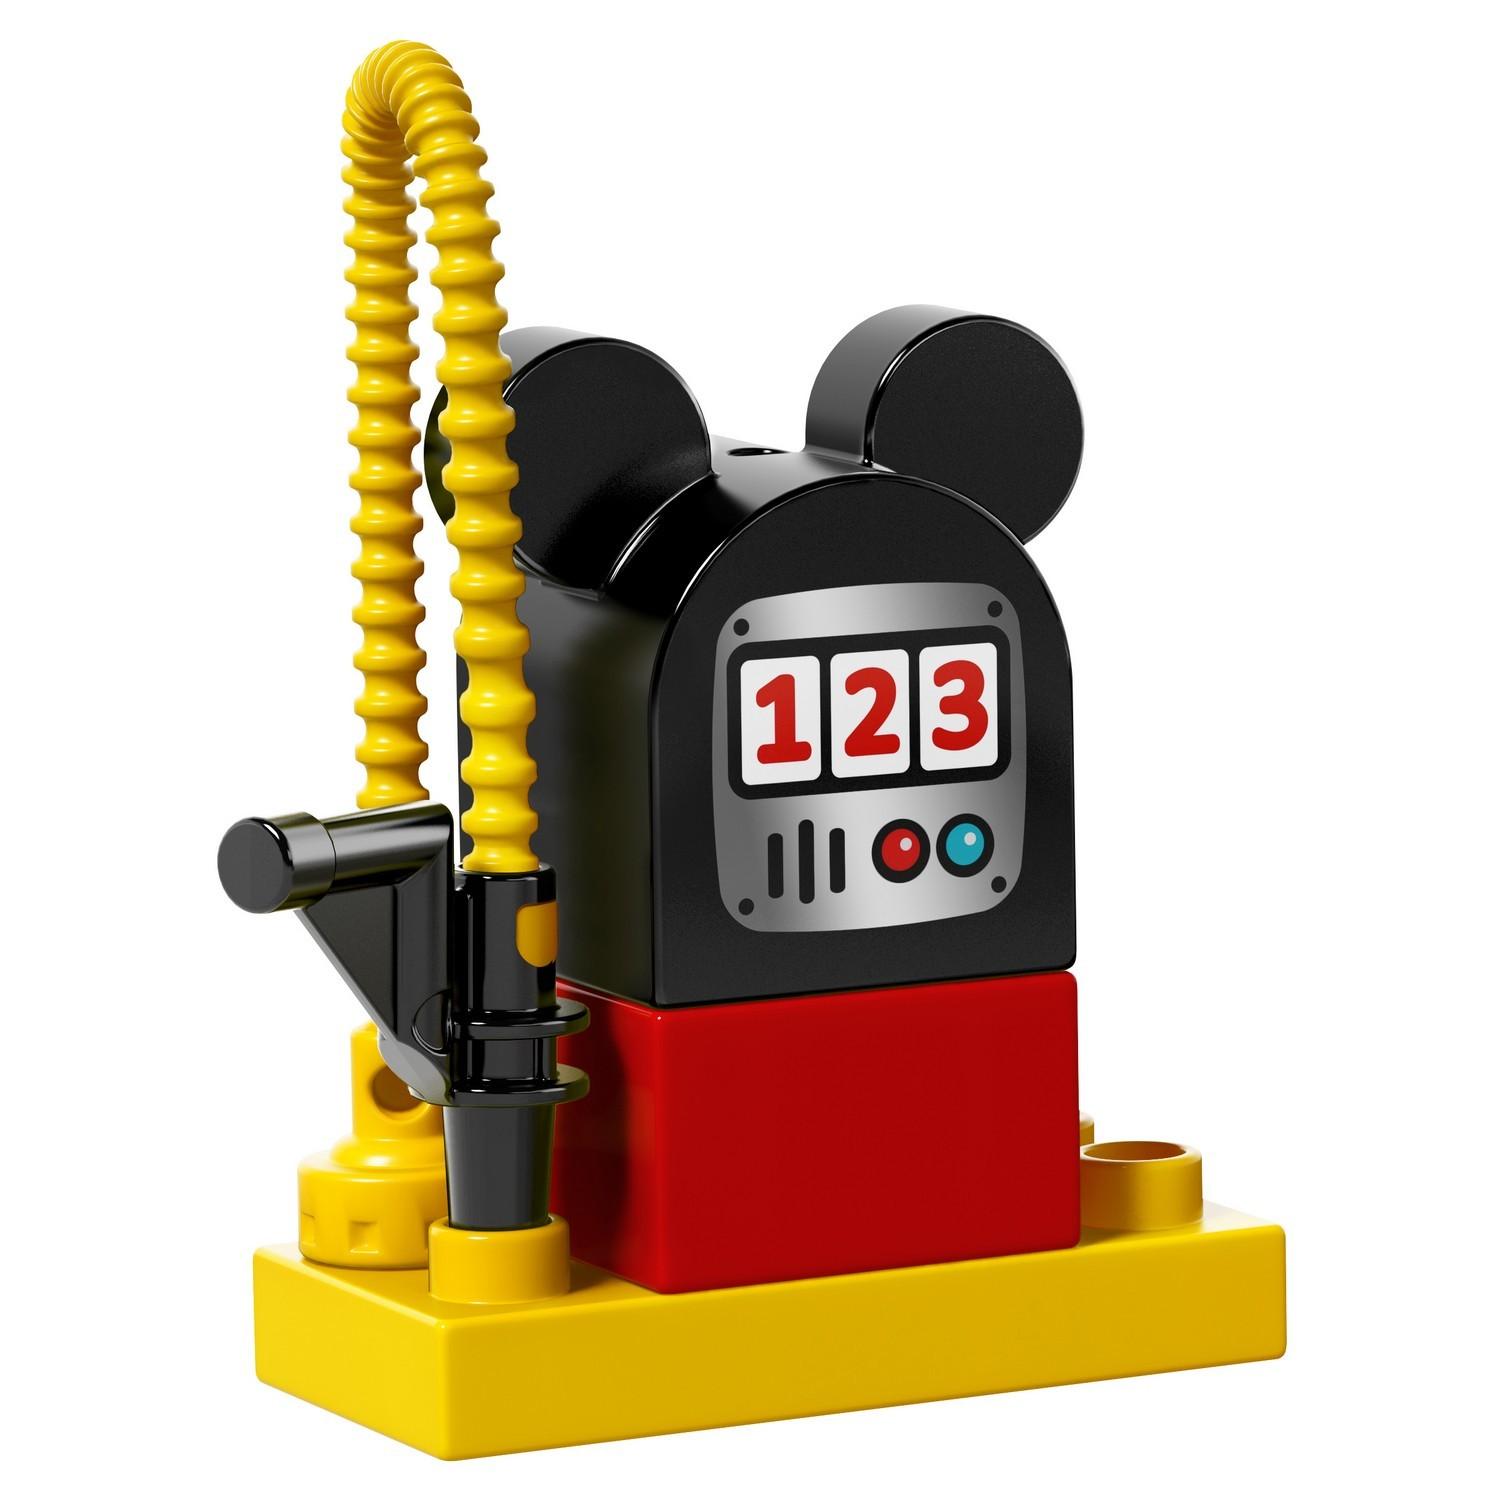 Lego Duplo 10843 Гоночная машина Микки